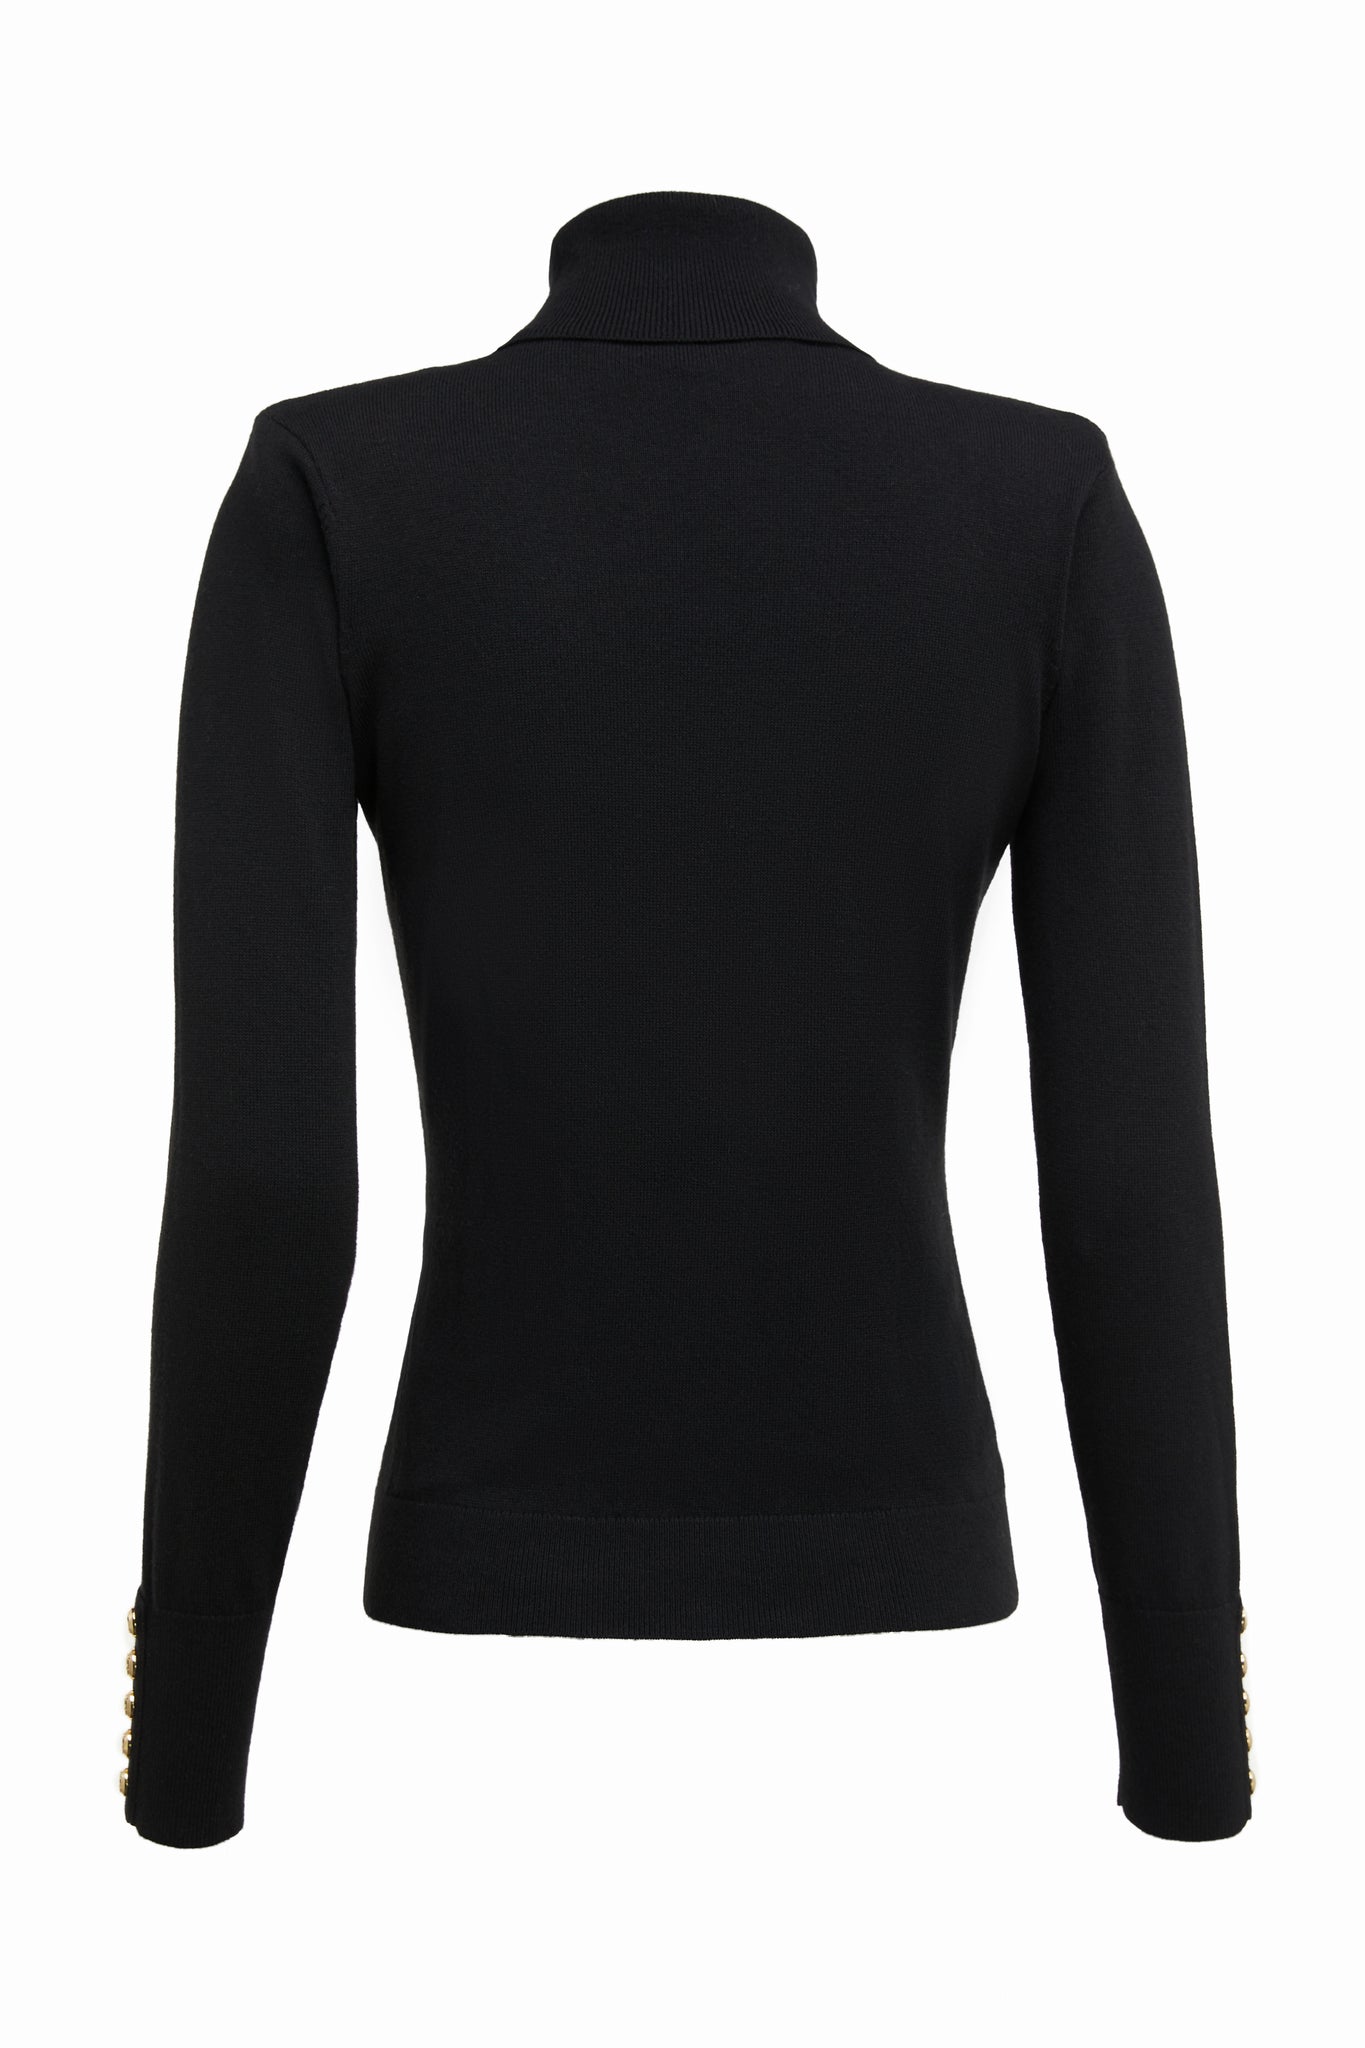 back of cashmere blend lightweight Roll neck knit in black with shoulder pads 